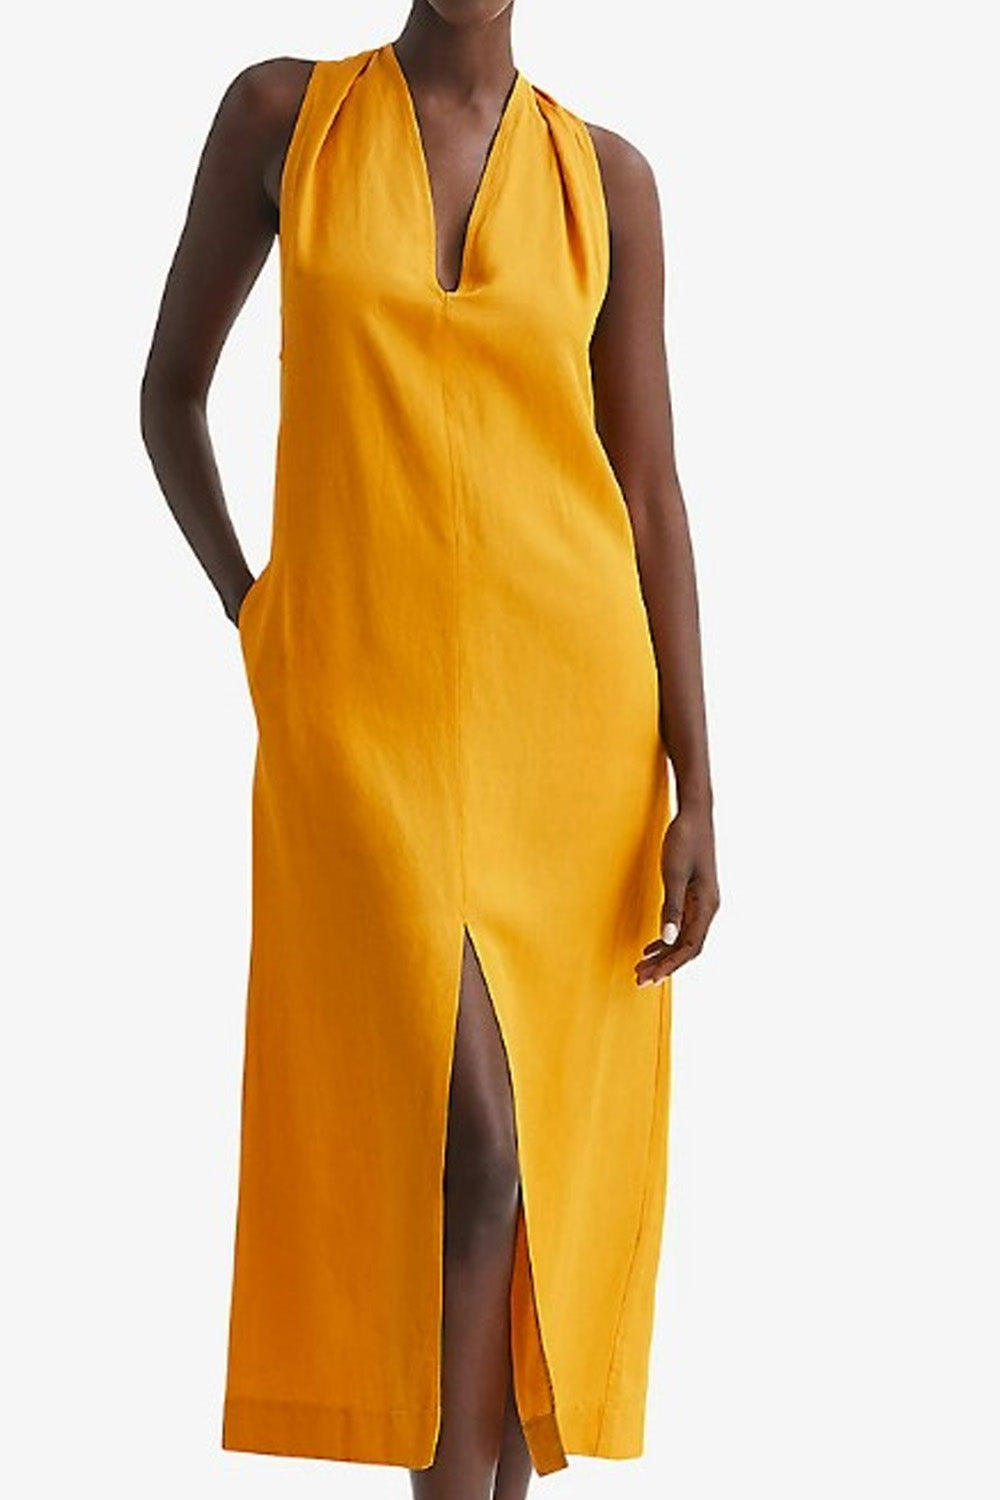 Ethereal yellow Dress